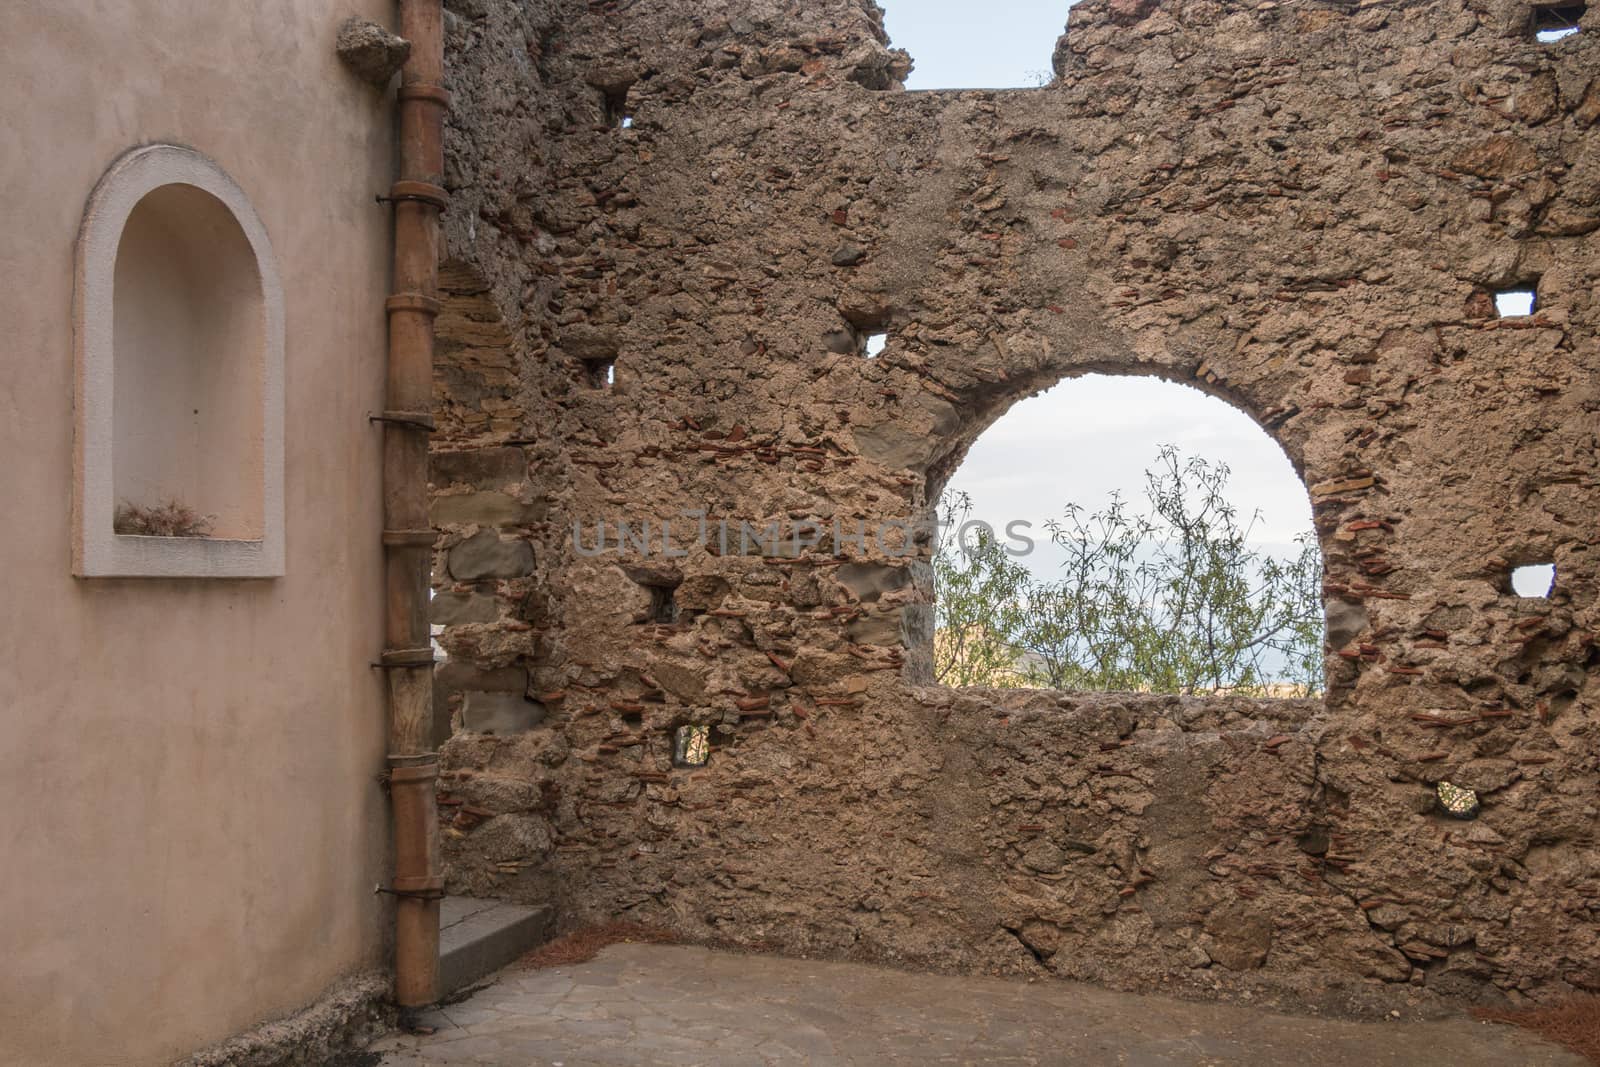 Ancient stone window that shows part of landscape